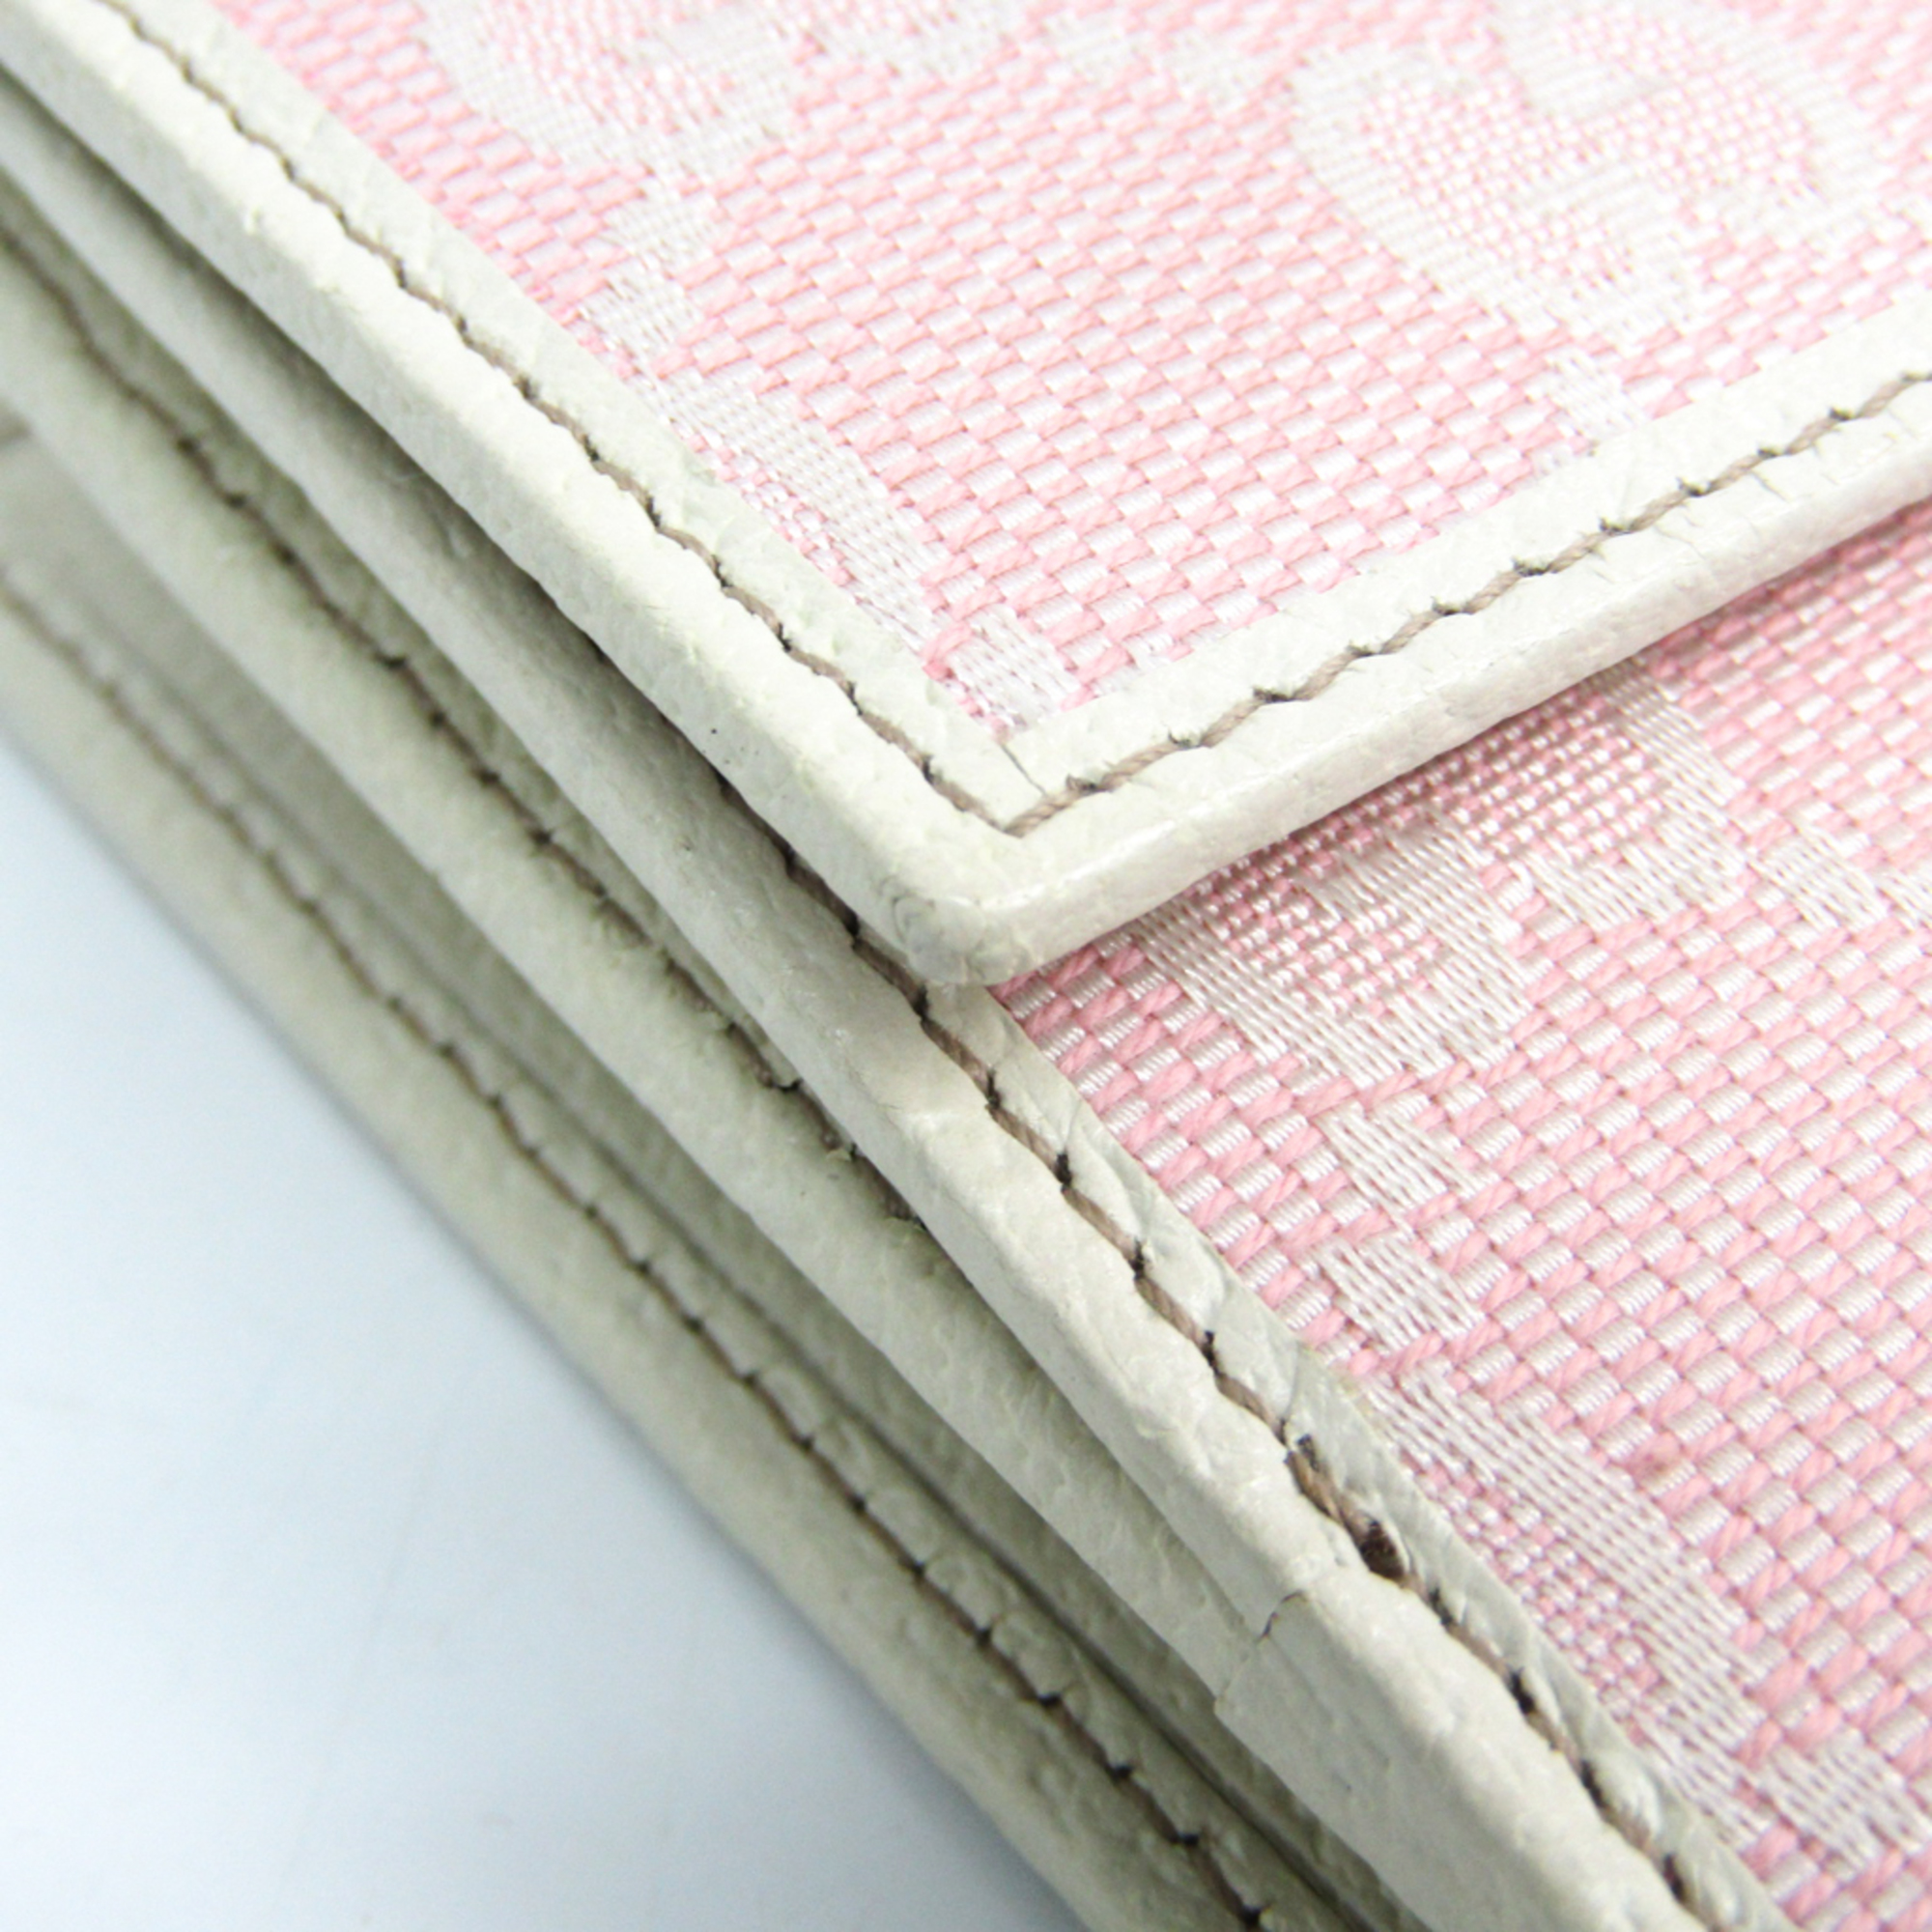 Gucci 154182 Women's GG Canvas,Leather Wallet (bi-fold) Cream,Pink